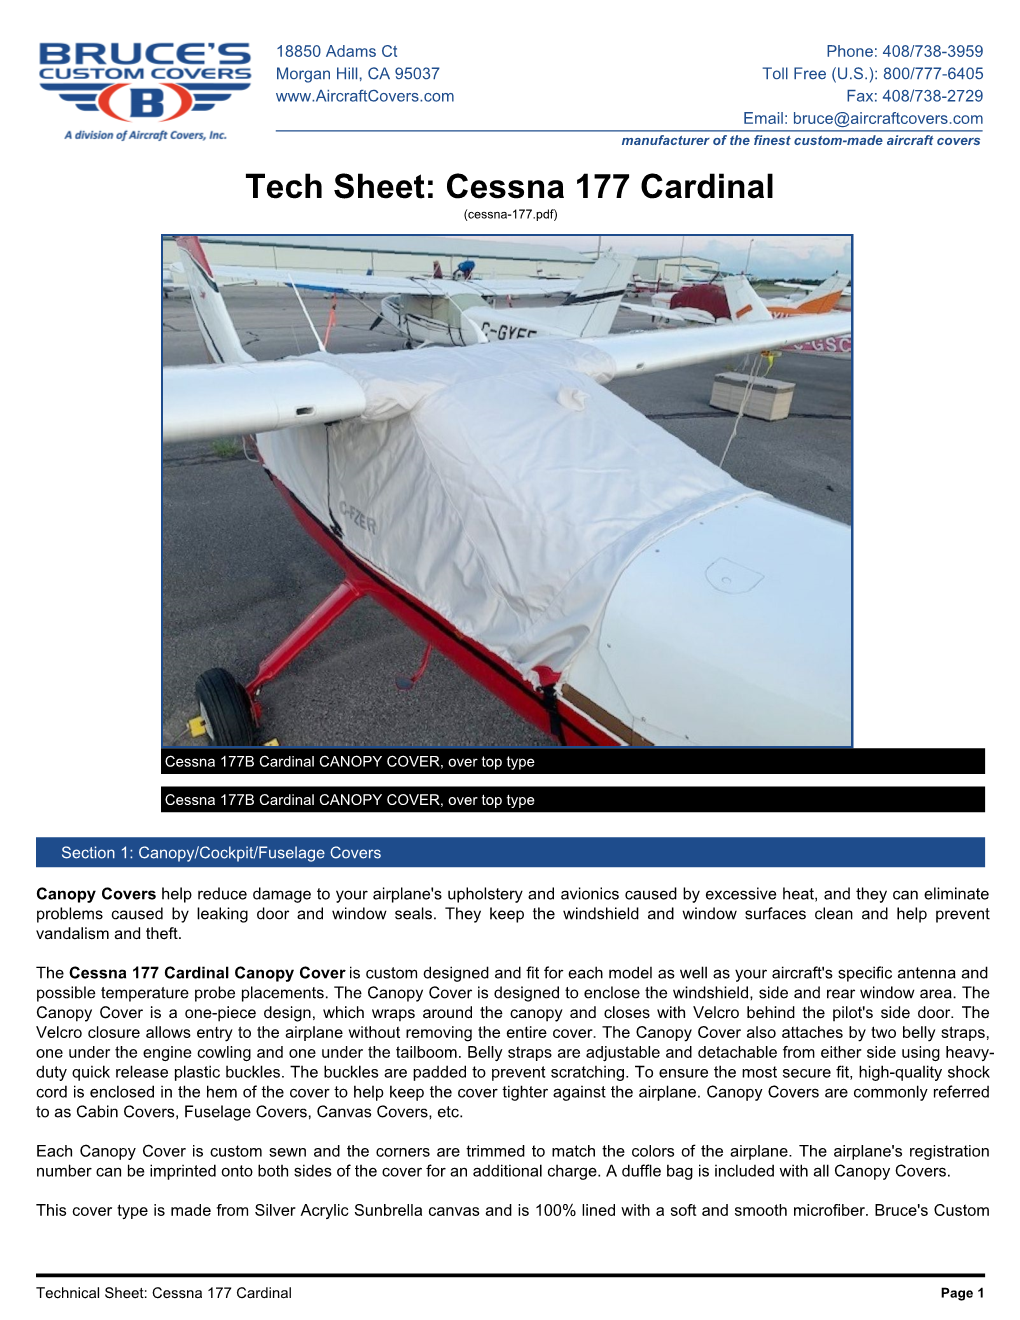 Cessna 177 Cardinal: Covers, Plugs, Sun Shades & More